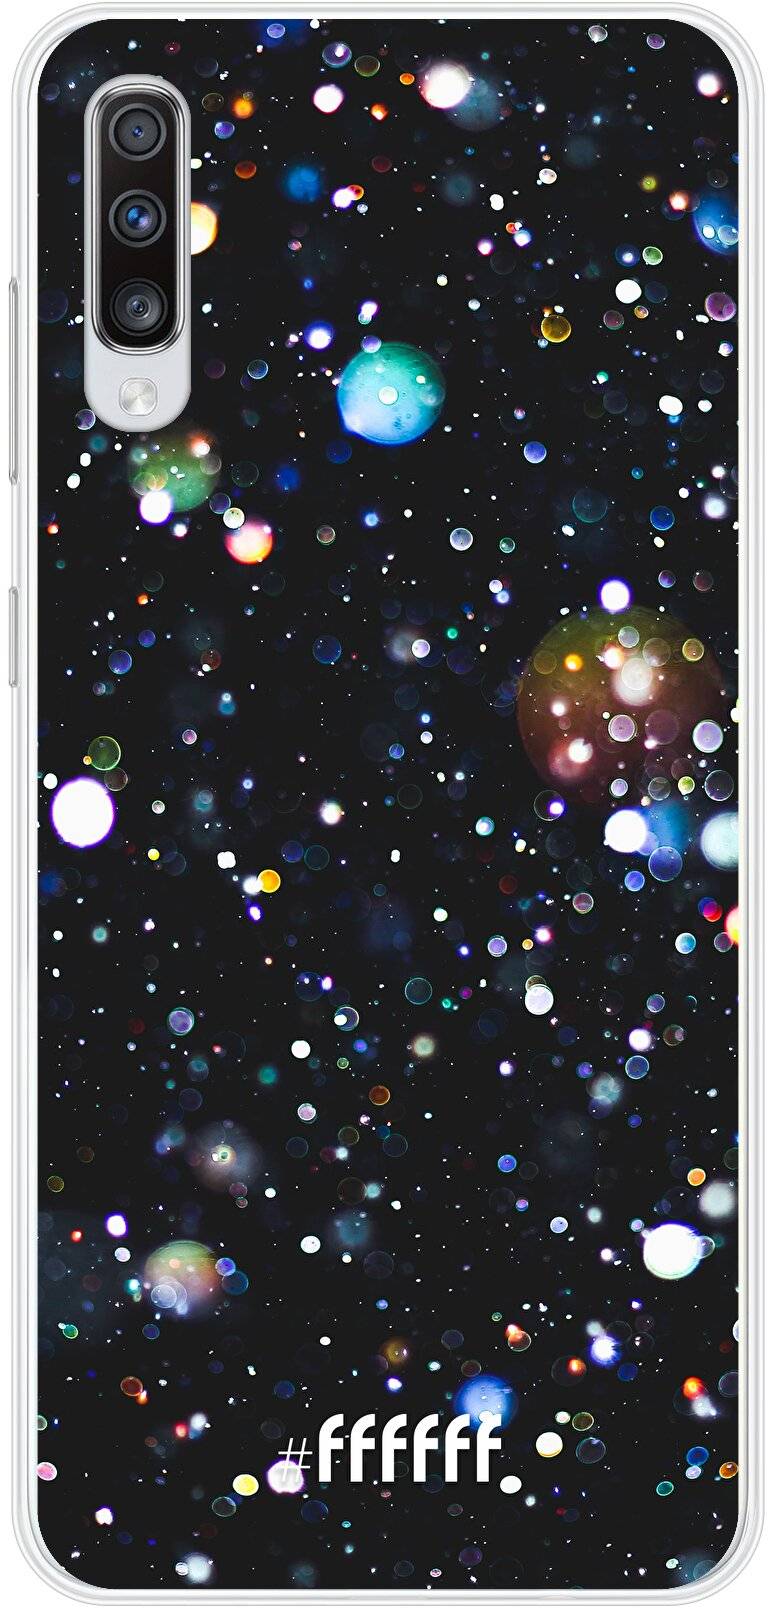 Galactic Bokeh Galaxy A70